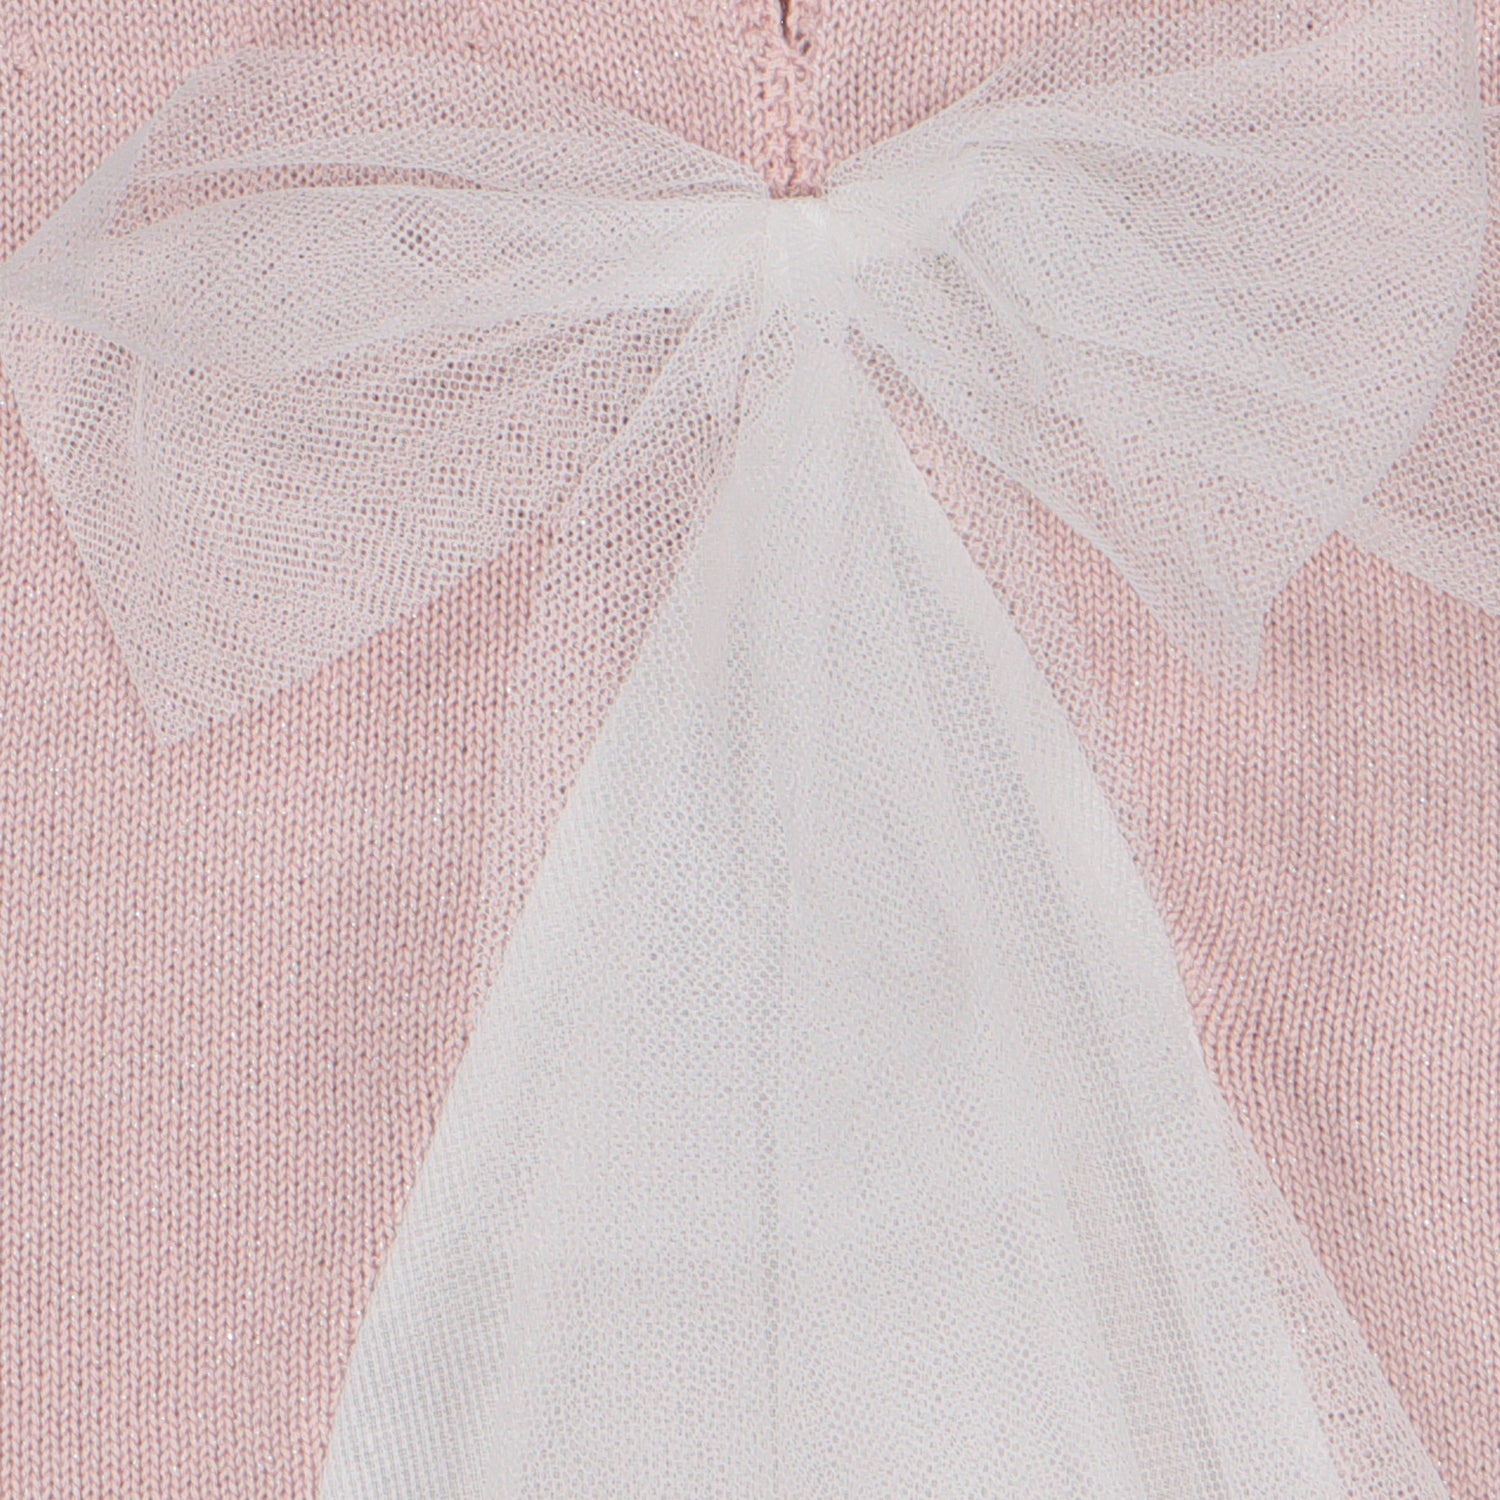 Dusty Pink Tulle Short Set